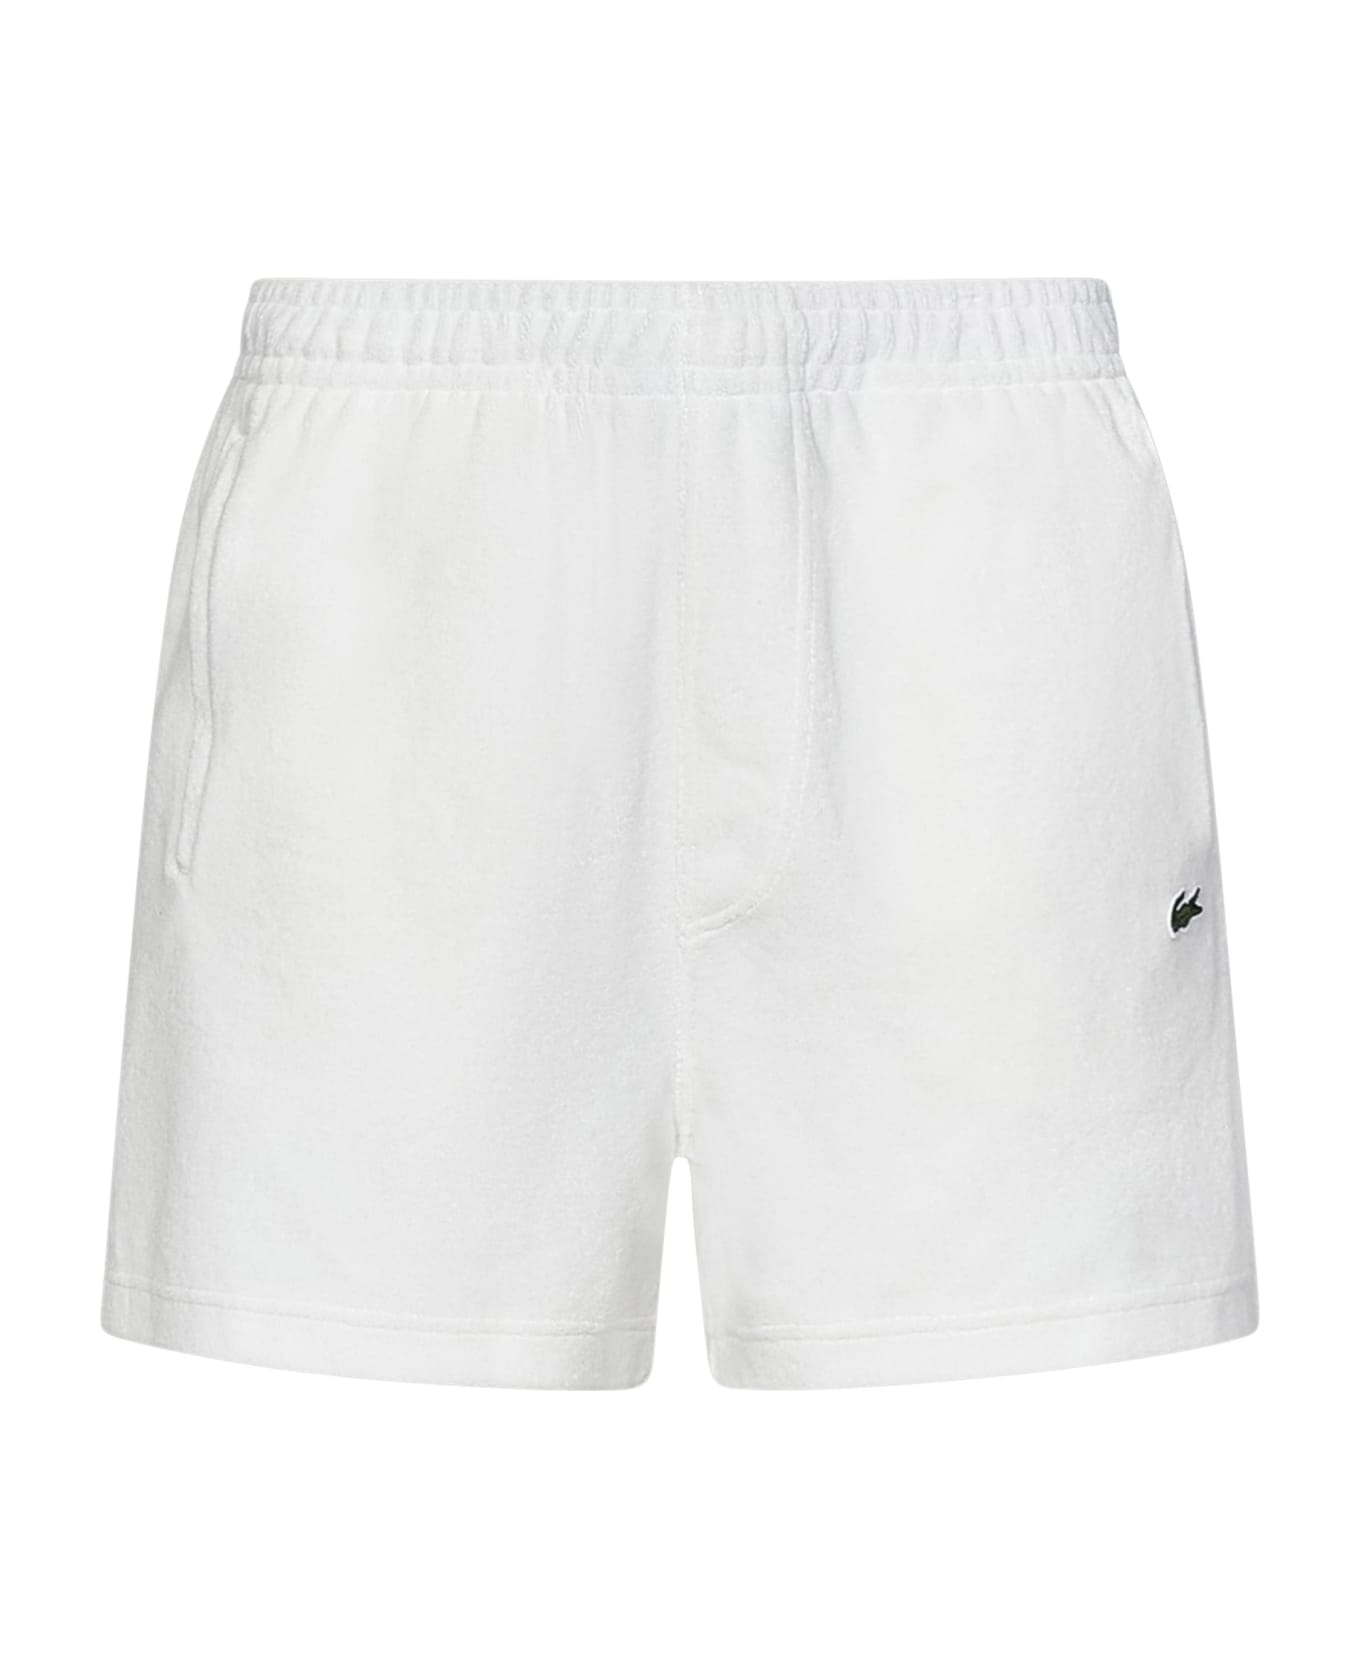 Lacoste Paris Shorts - White ショートパンツ